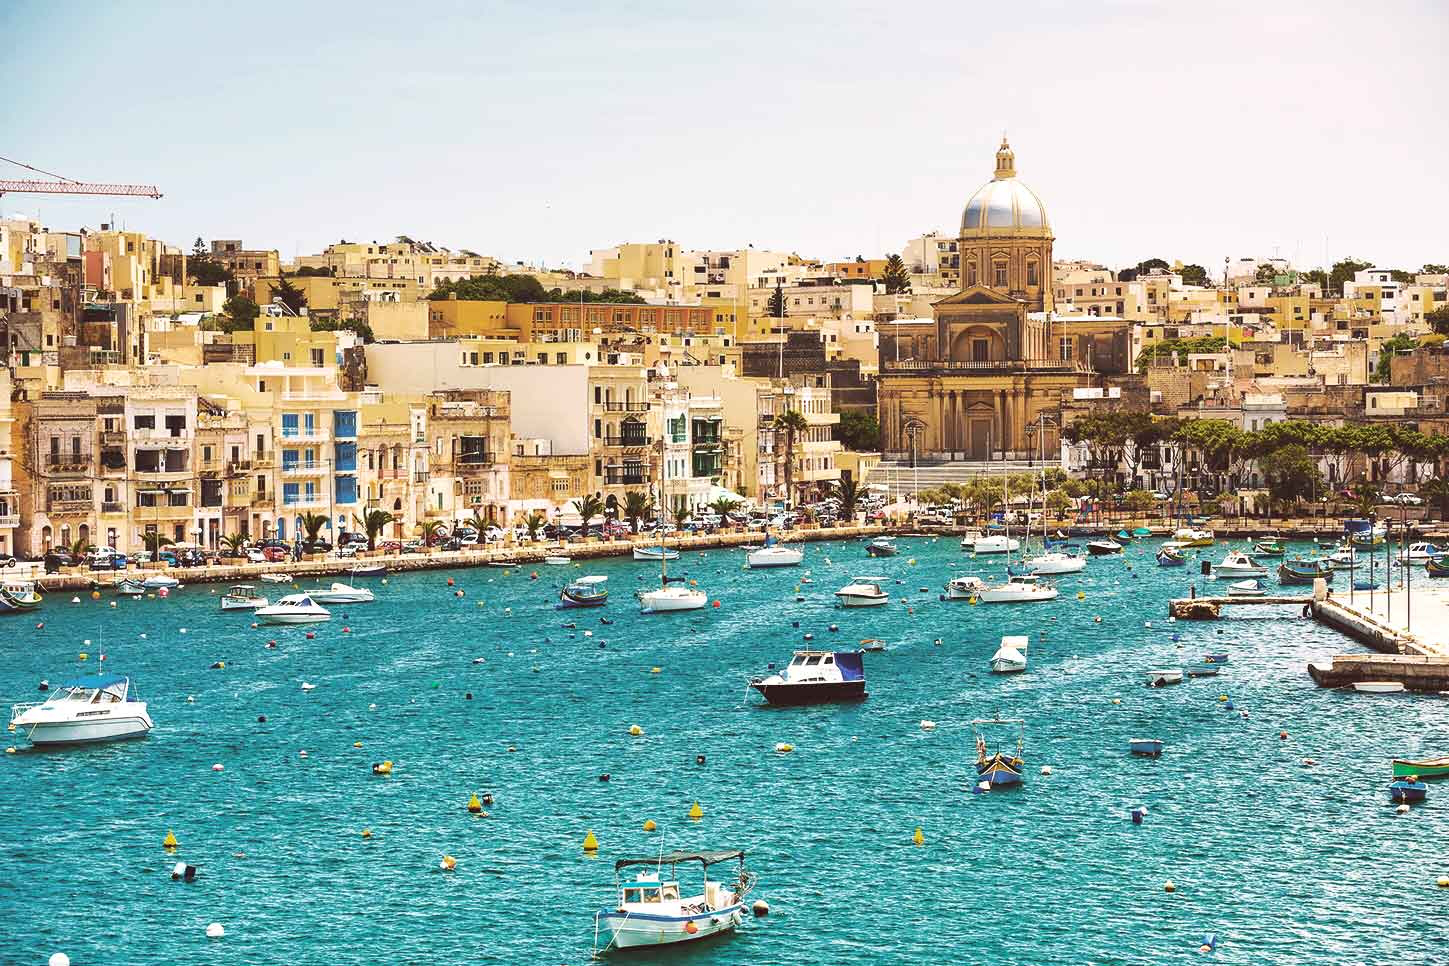 Malta is one of the best Mediterranean honeymoon destinations